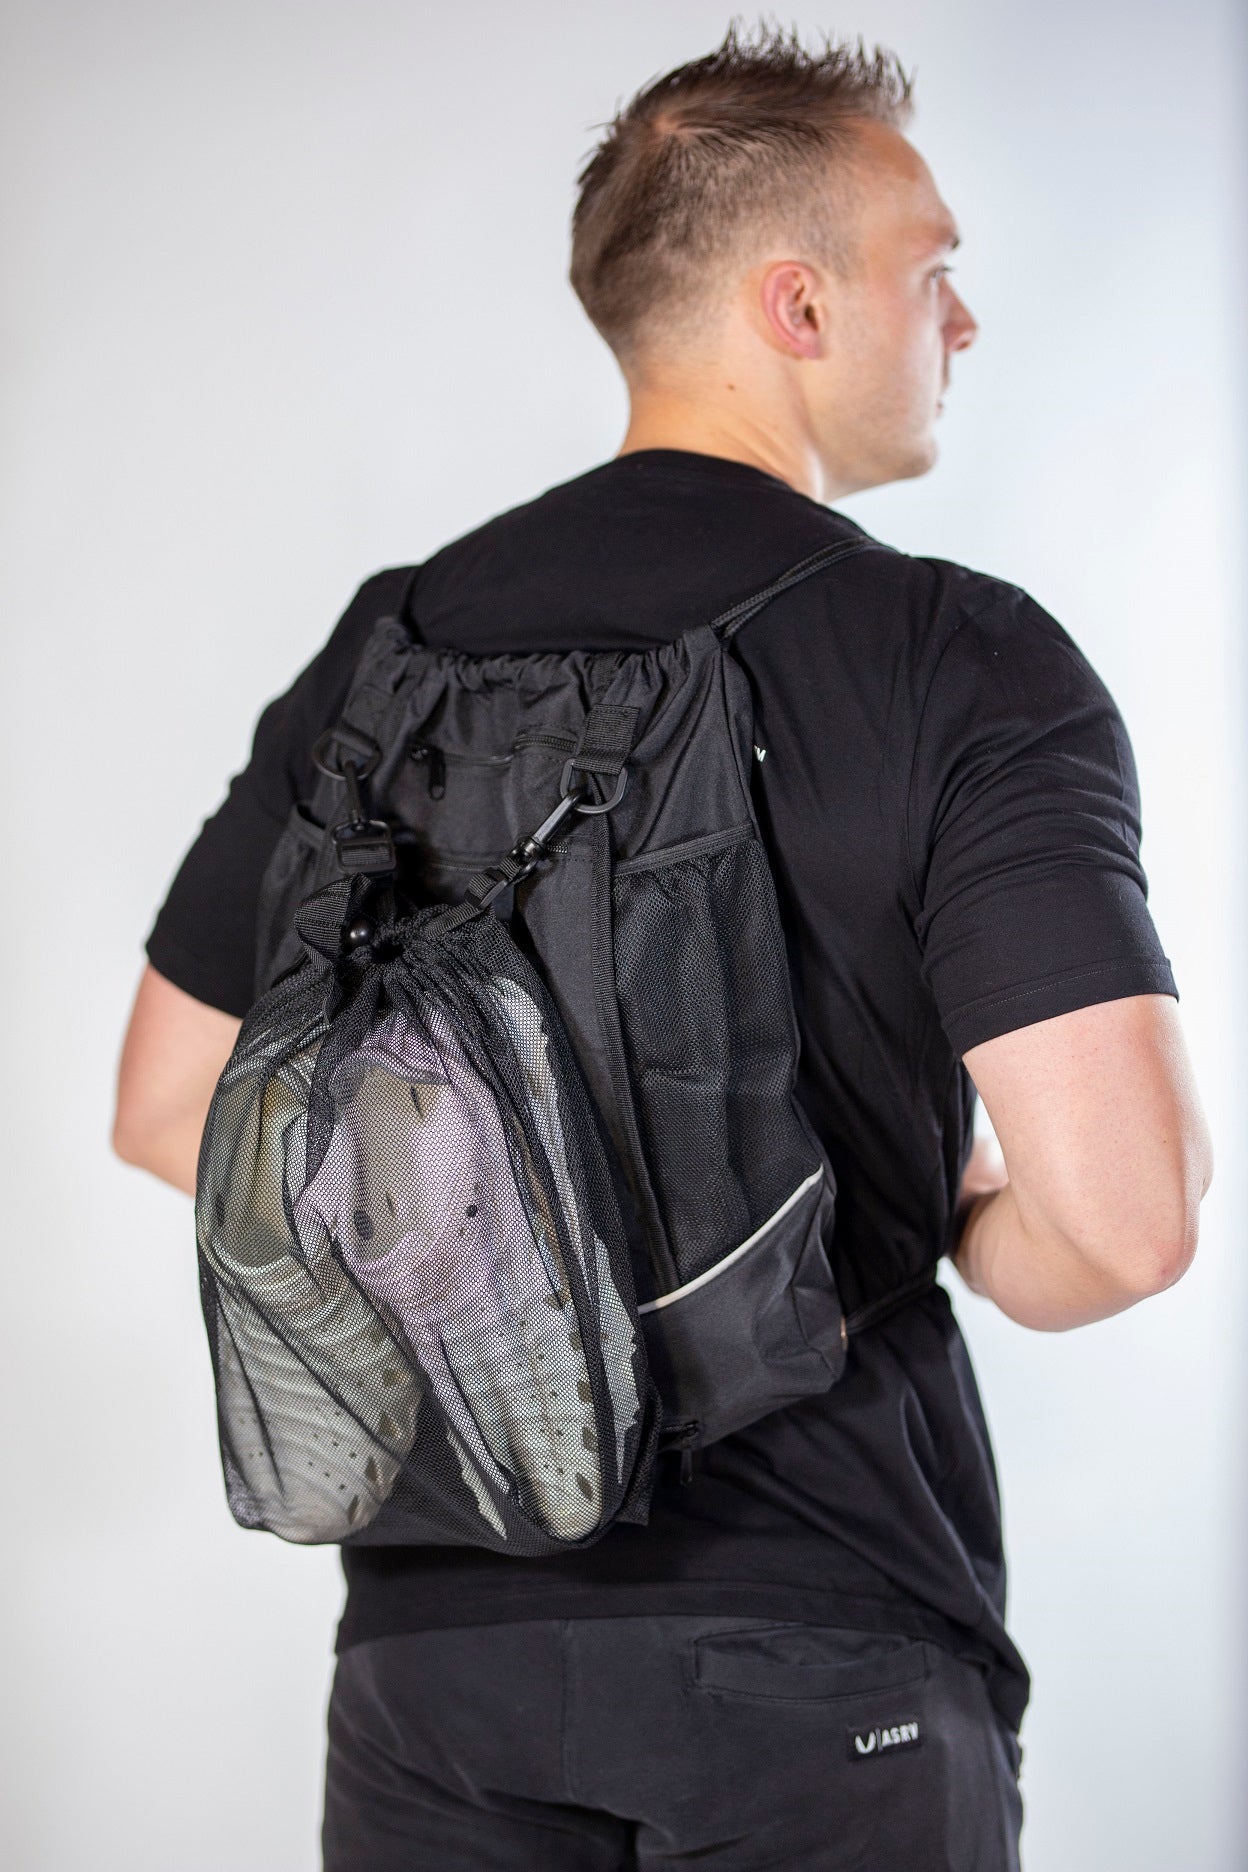 Nylon Mesh Drawstring Bag w/ Shoulder Strap & D-Ring